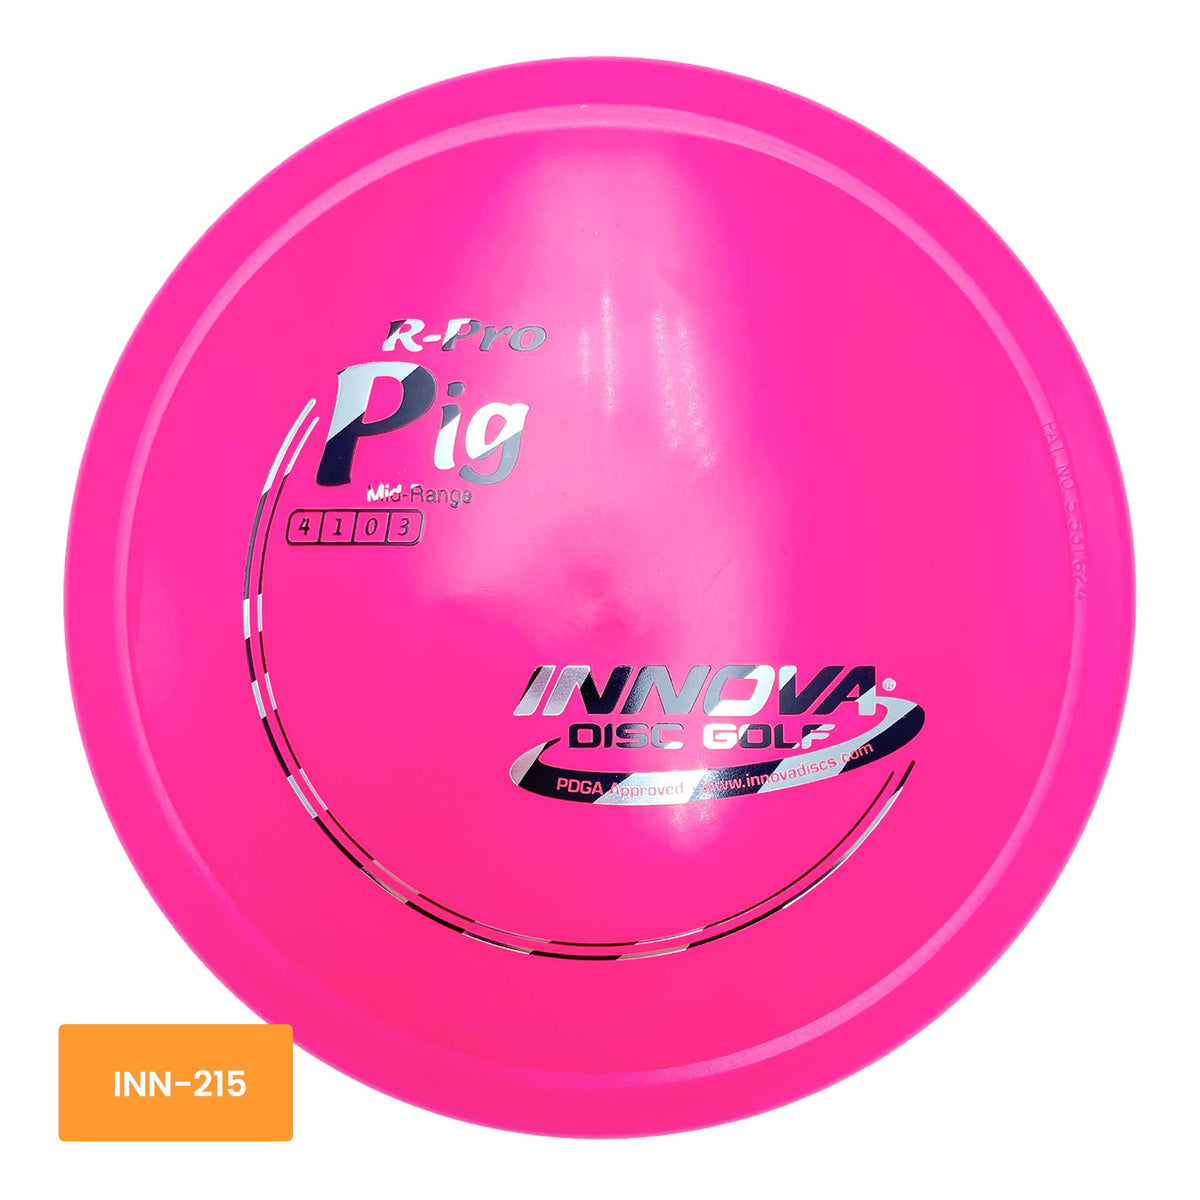 Innova Disc Golf R-Pro Pig putter and approach - Pink